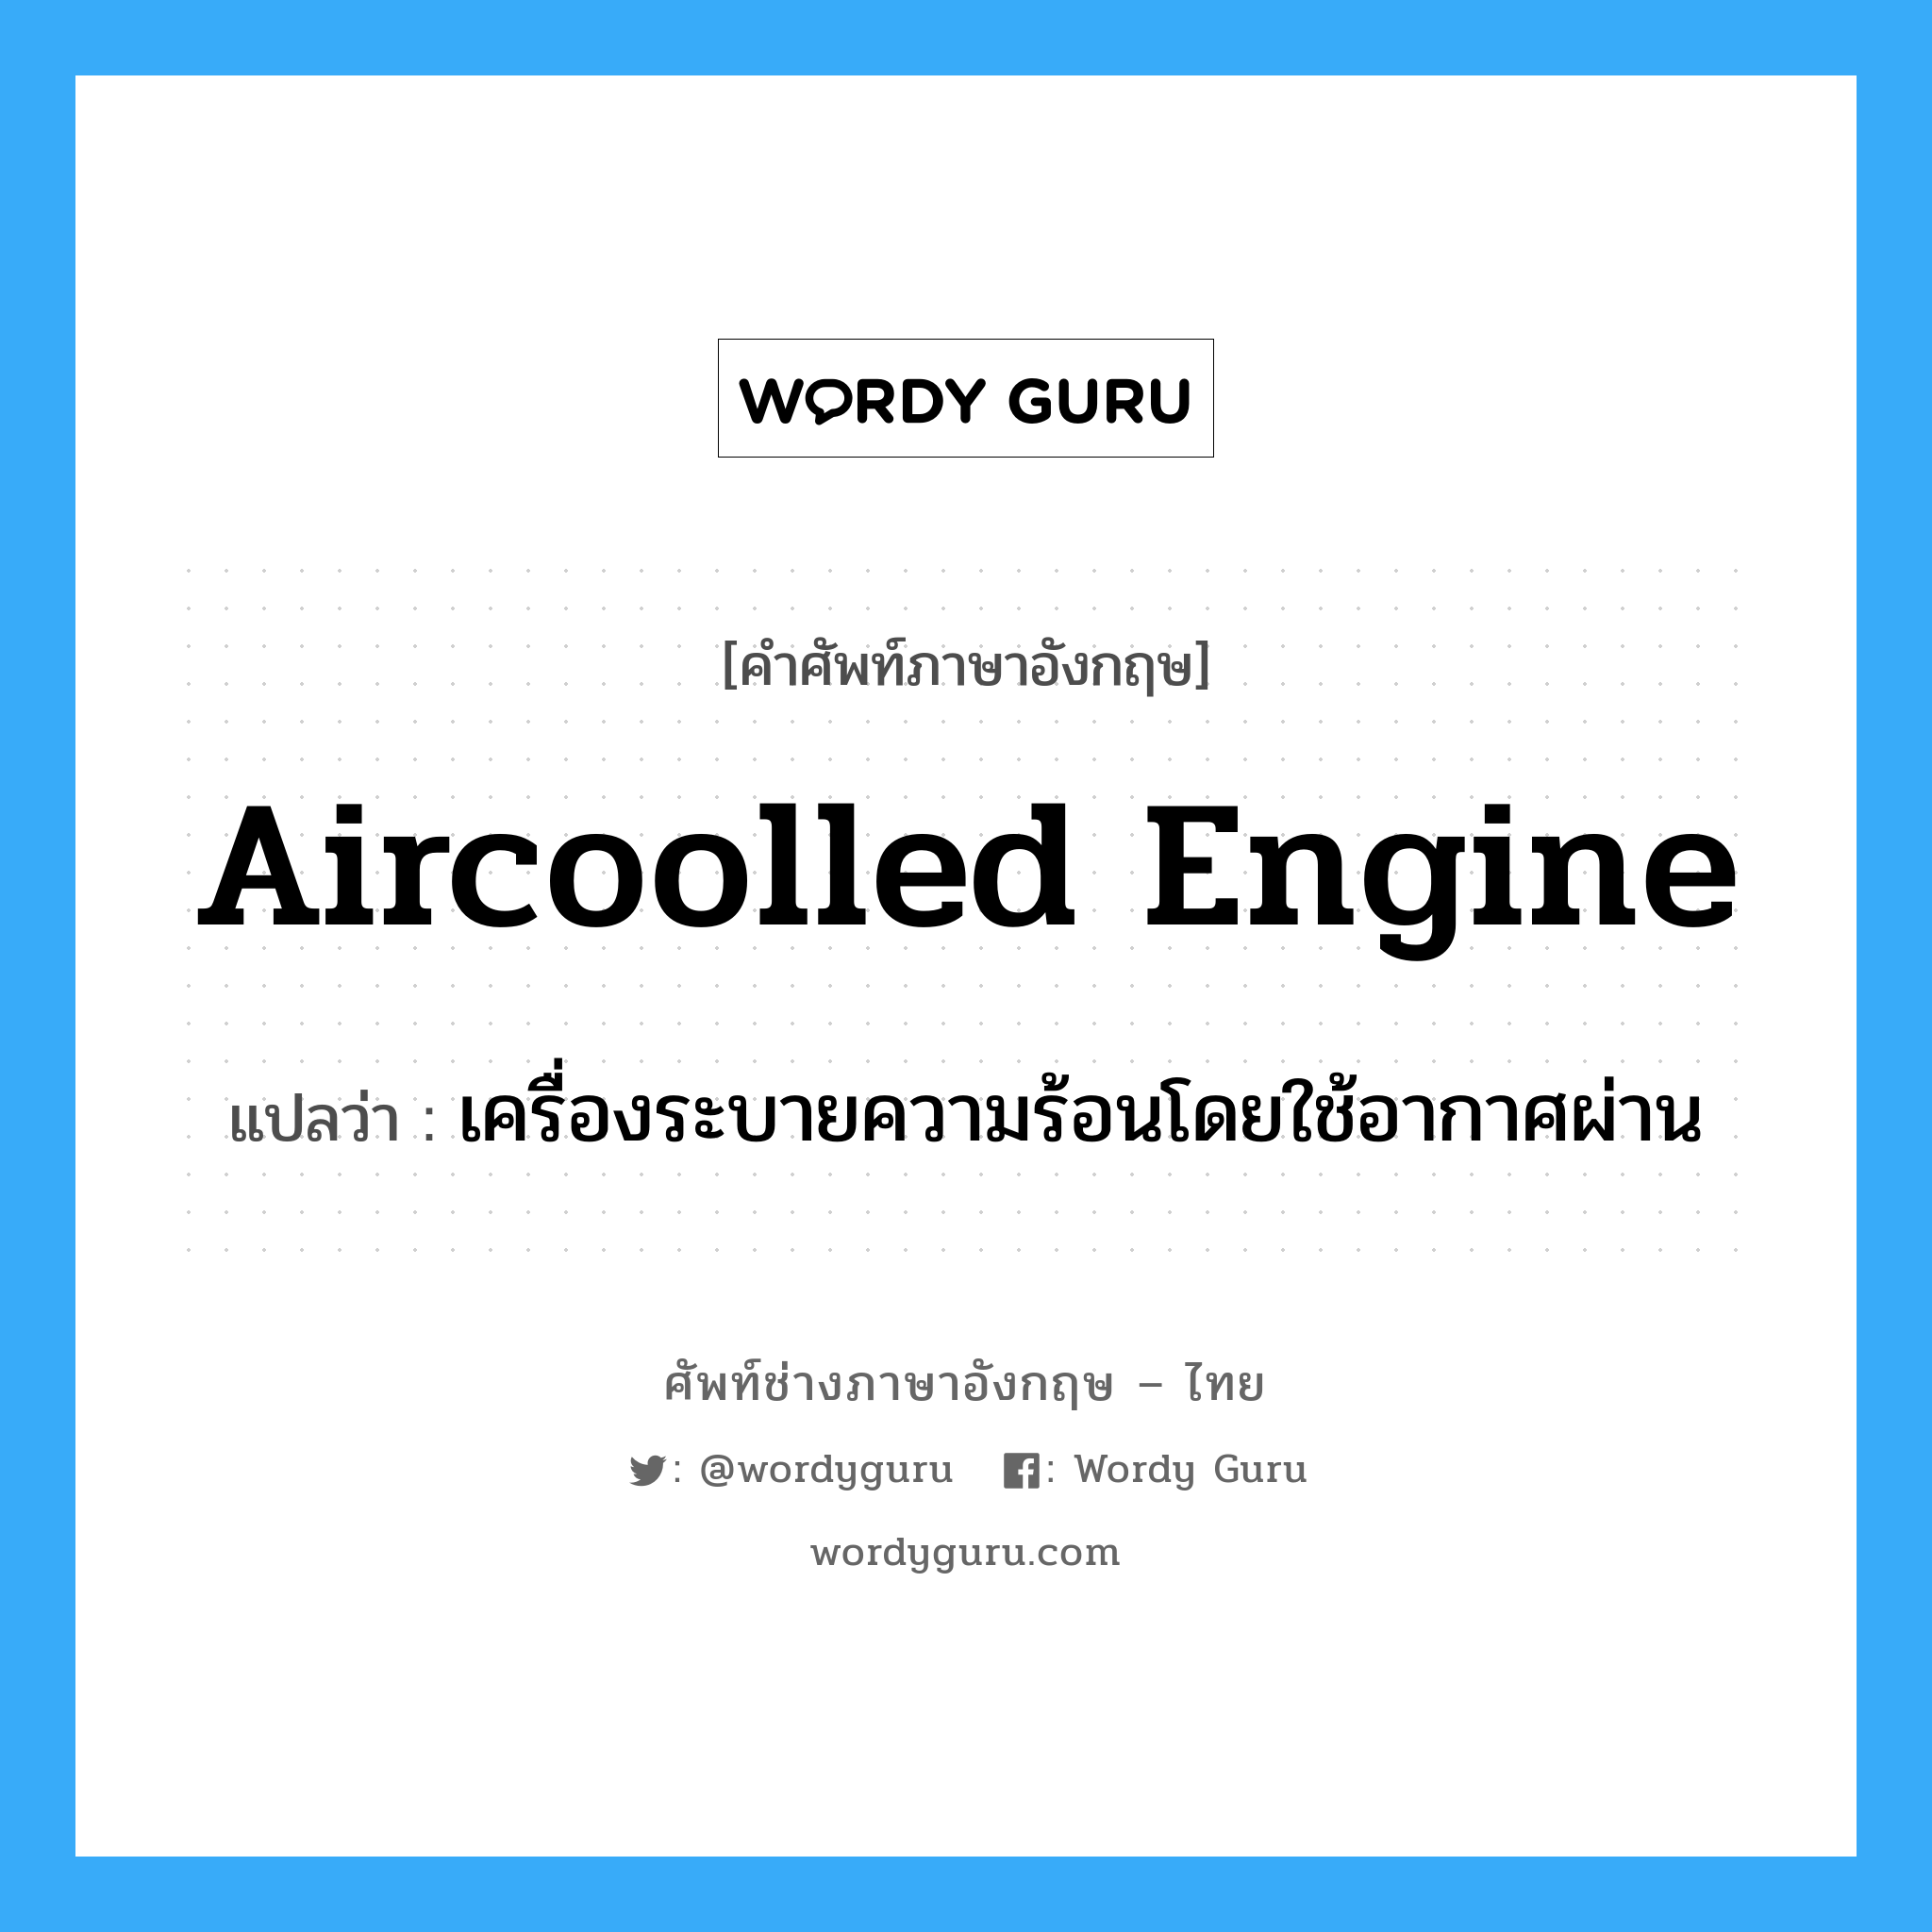 aircoolled engine แปลว่า?, คำศัพท์ช่างภาษาอังกฤษ - ไทย aircoolled engine คำศัพท์ภาษาอังกฤษ aircoolled engine แปลว่า เครื่องระบายความร้อนโดยใช้อากาศผ่าน